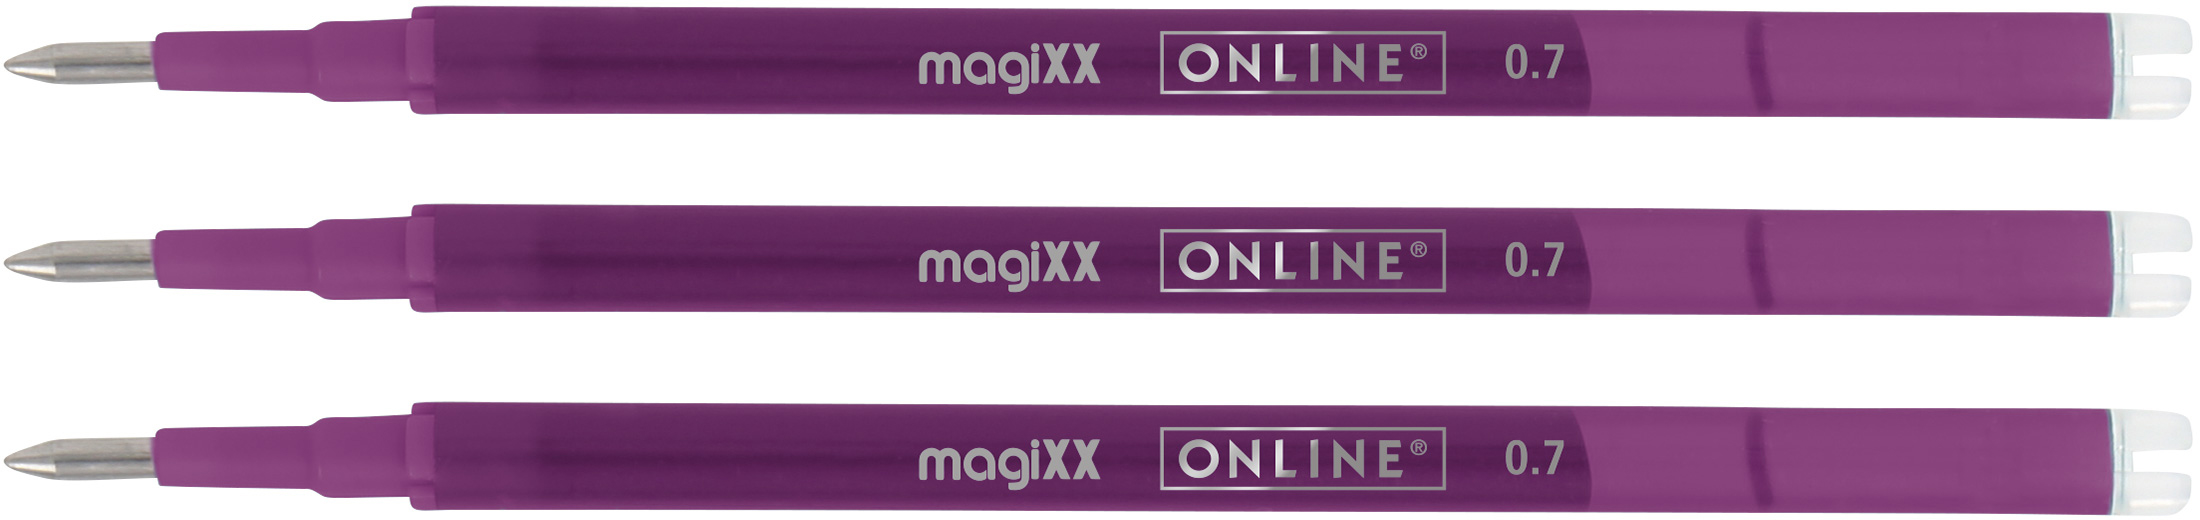 ONLINE Mine Gel MagiXX 40163/3 lilac, Tag-Bag 0.7mm lilac, Tag-Bag 0.7mm